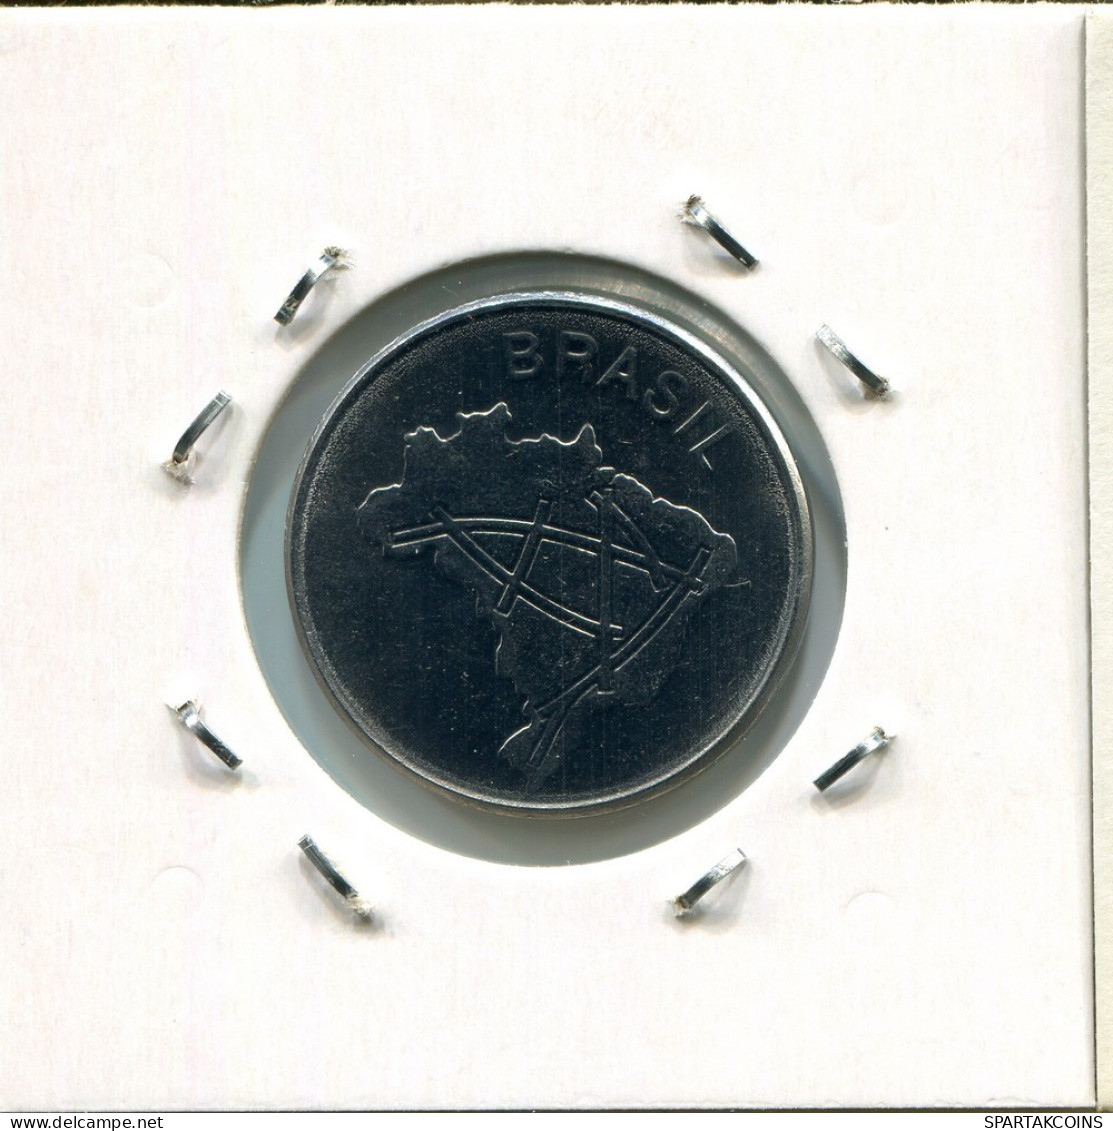 10 CRUZEIROS 1984 BRAZIL Coin #AR309.U.A - Brésil